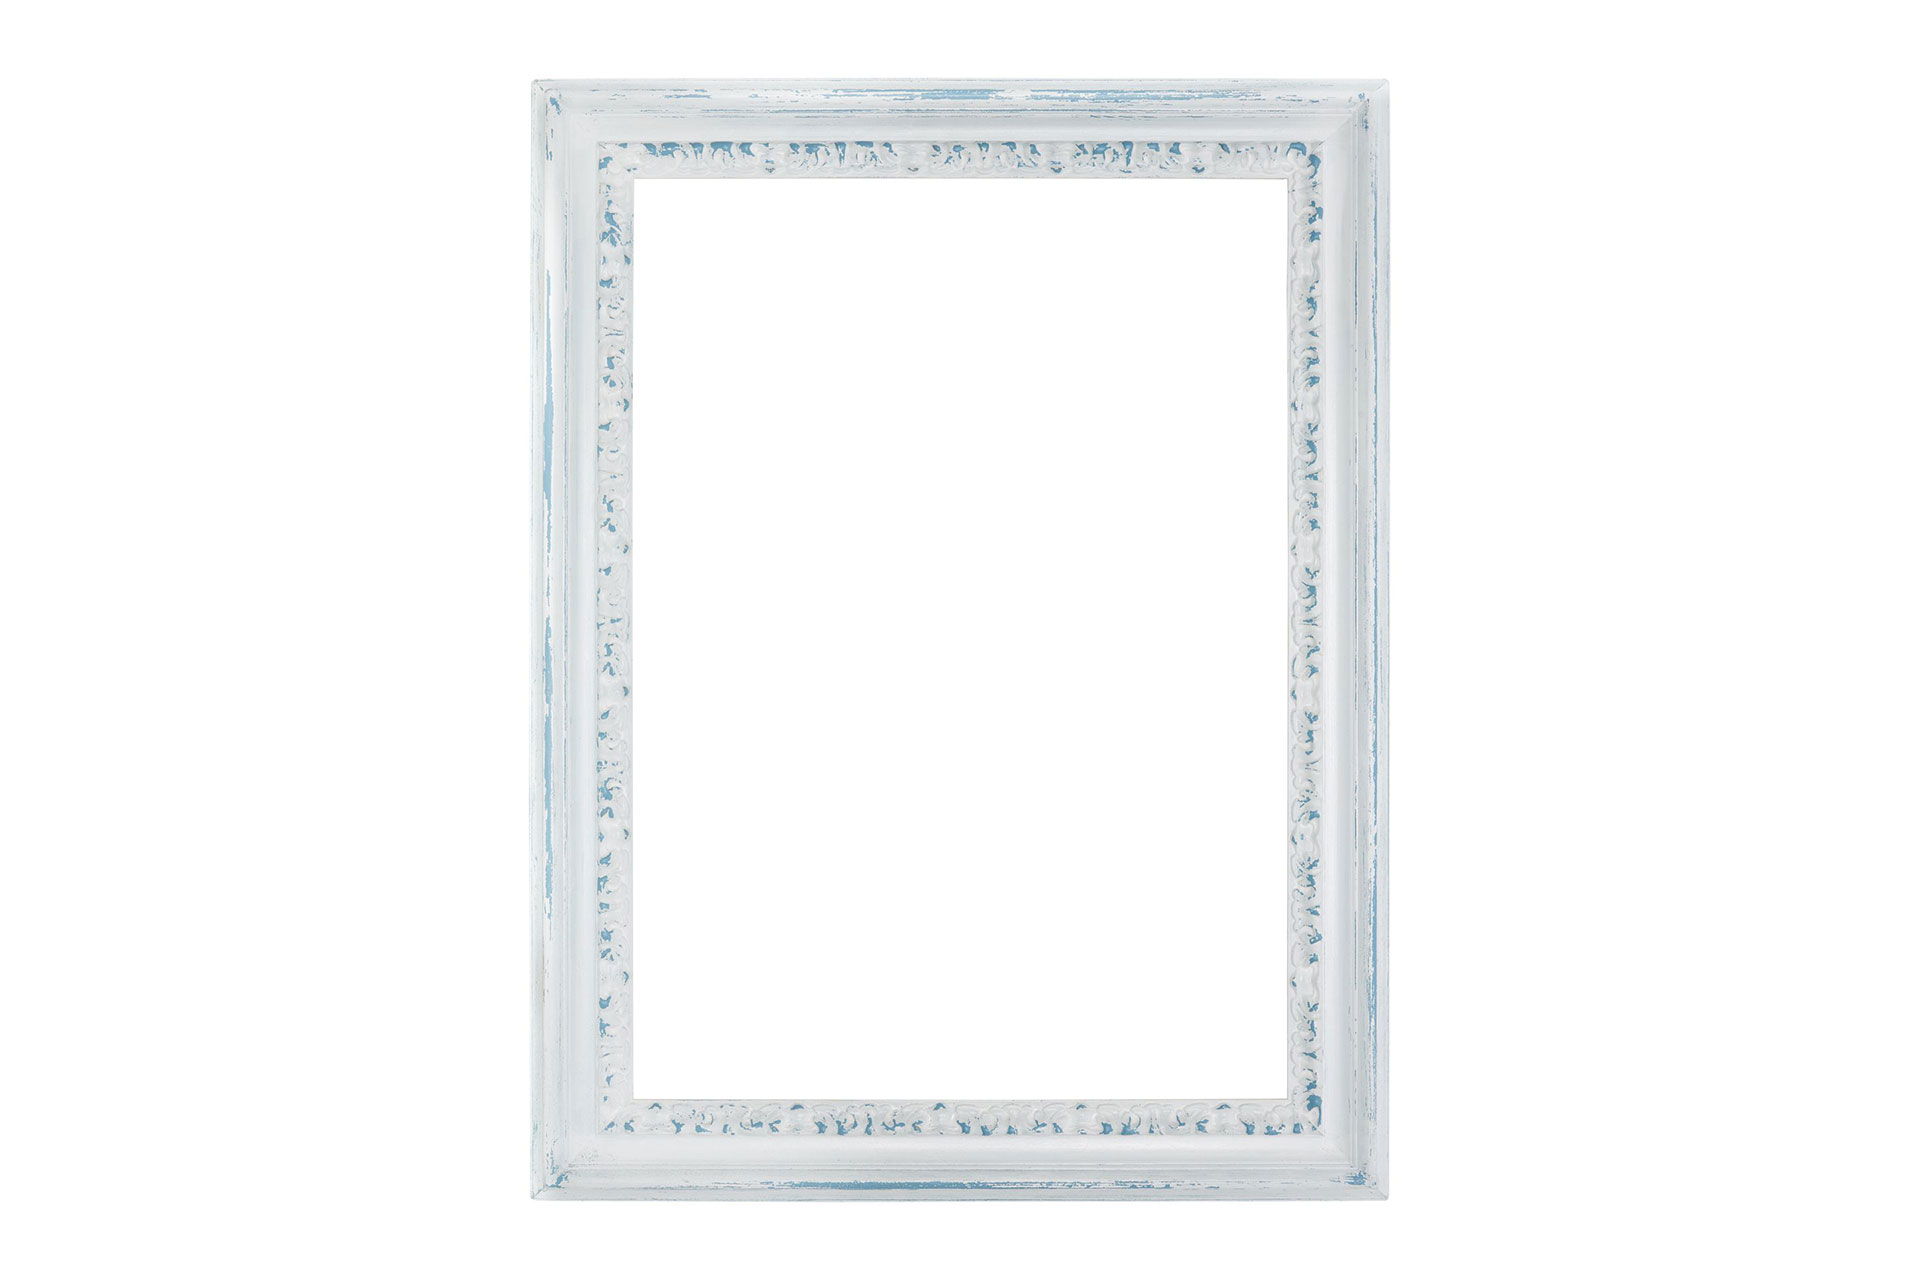 Wandspiegel Modell Korsika Shabby Chic, rechteckig, Finishing: pastellblau, weiss, Shabby-Chic,  Frontansicht Rahmen